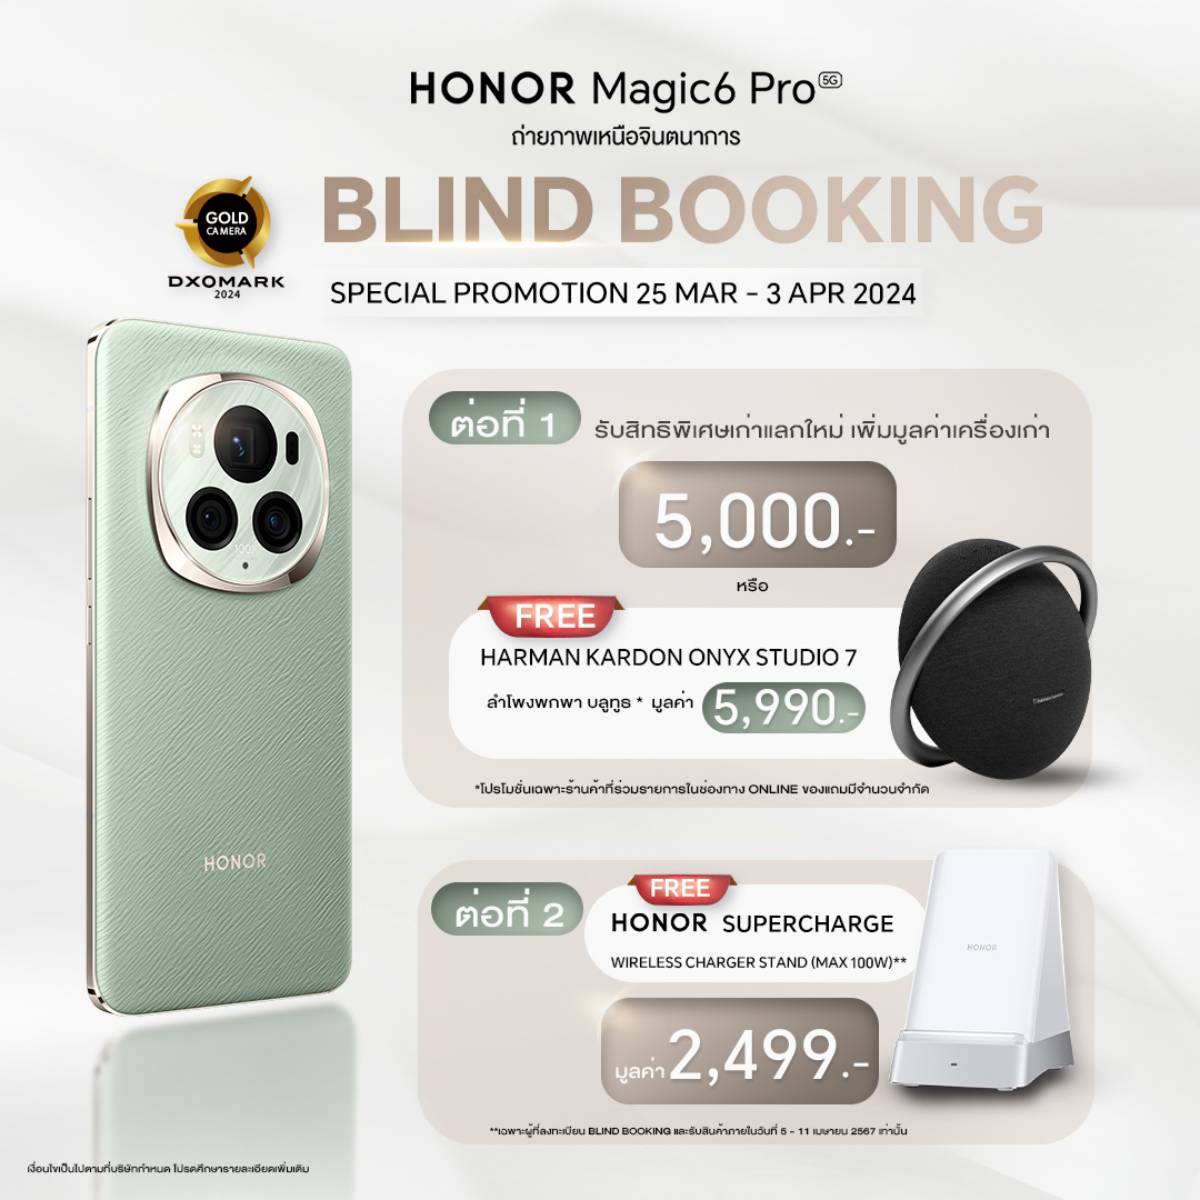 HONOR Magic 6 Pro เปิดตัว 4 เม.ย. นี้ เปิดจอง Blind Booking รับสิทธิพิเศษ